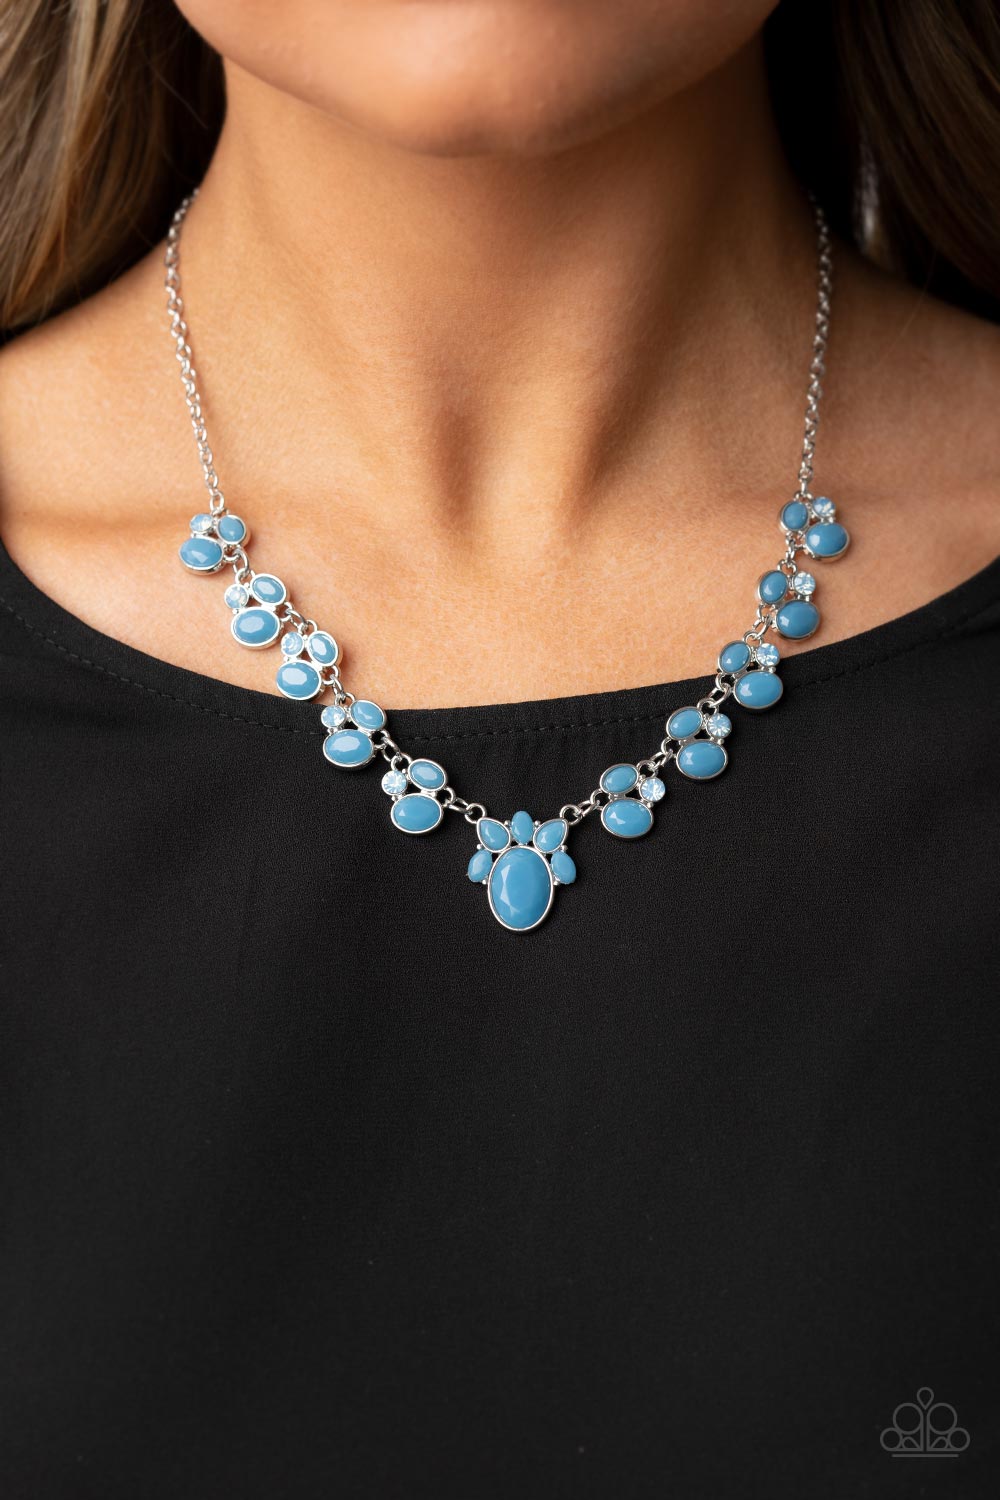 Paparazzi “Fairytale Forte” Blue Necklace Earring Set